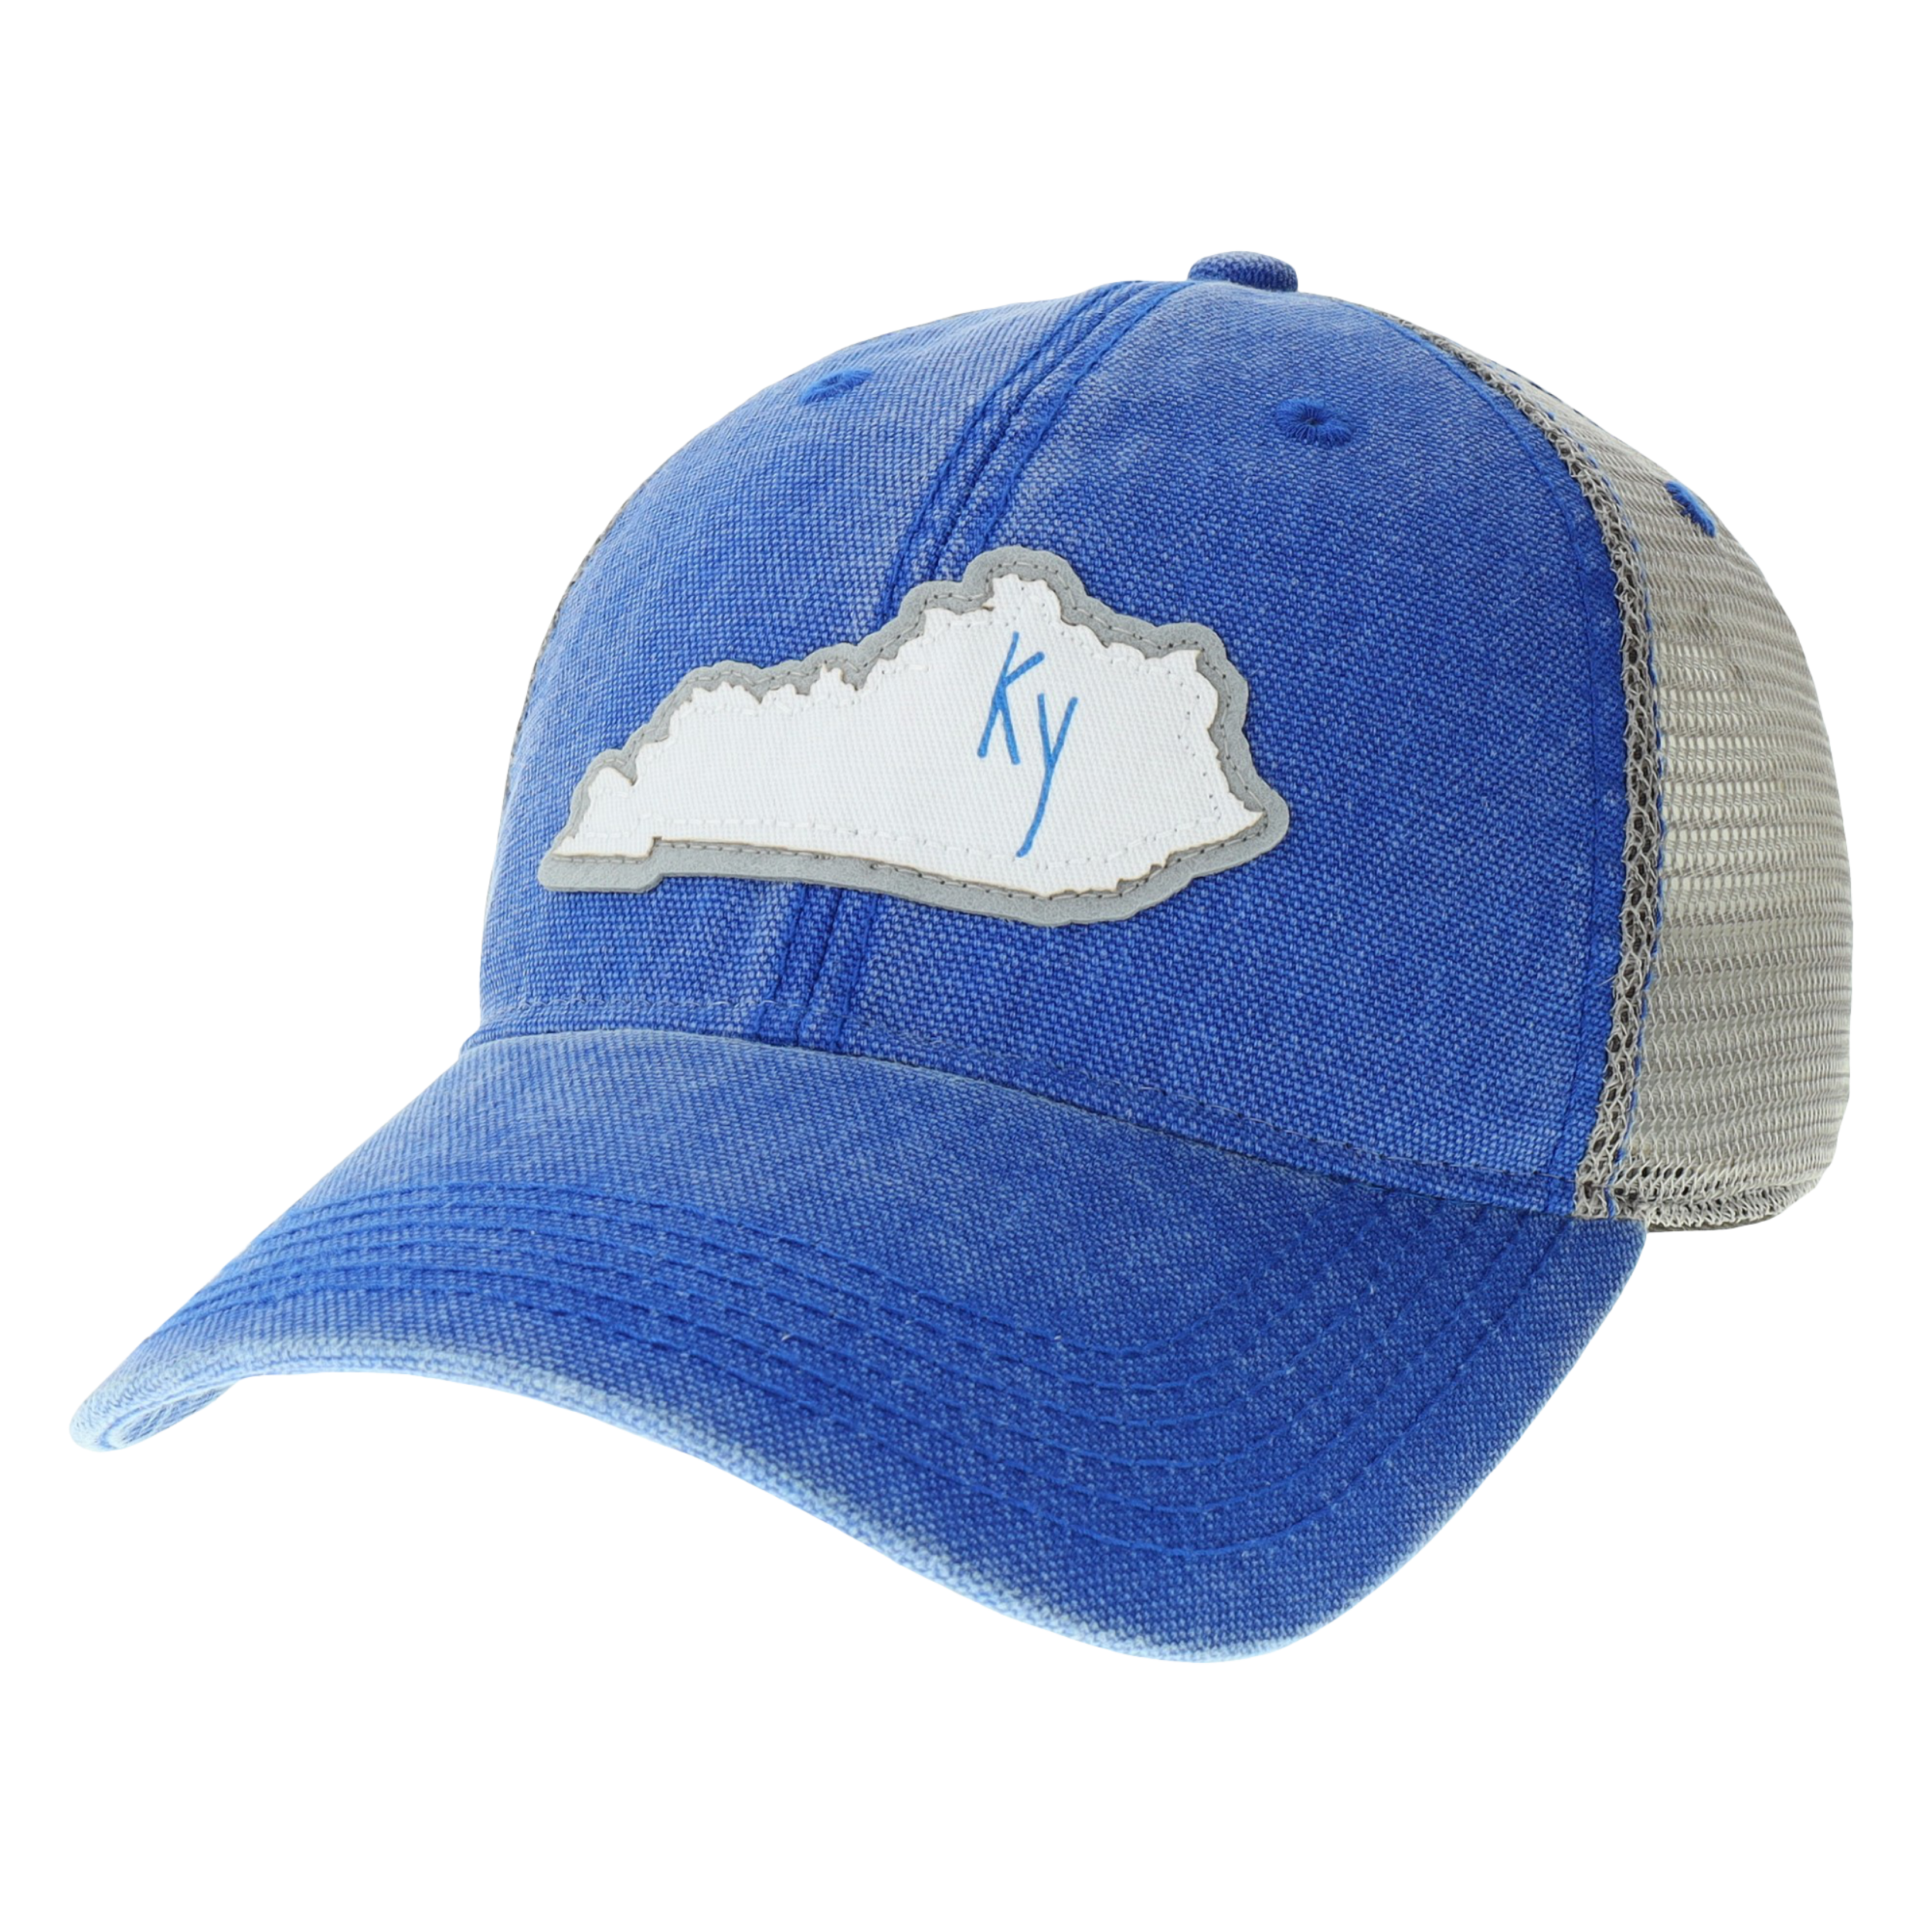 Kentucky Dashboard Trucker Hat in Royal Blue/Grey – Aisling